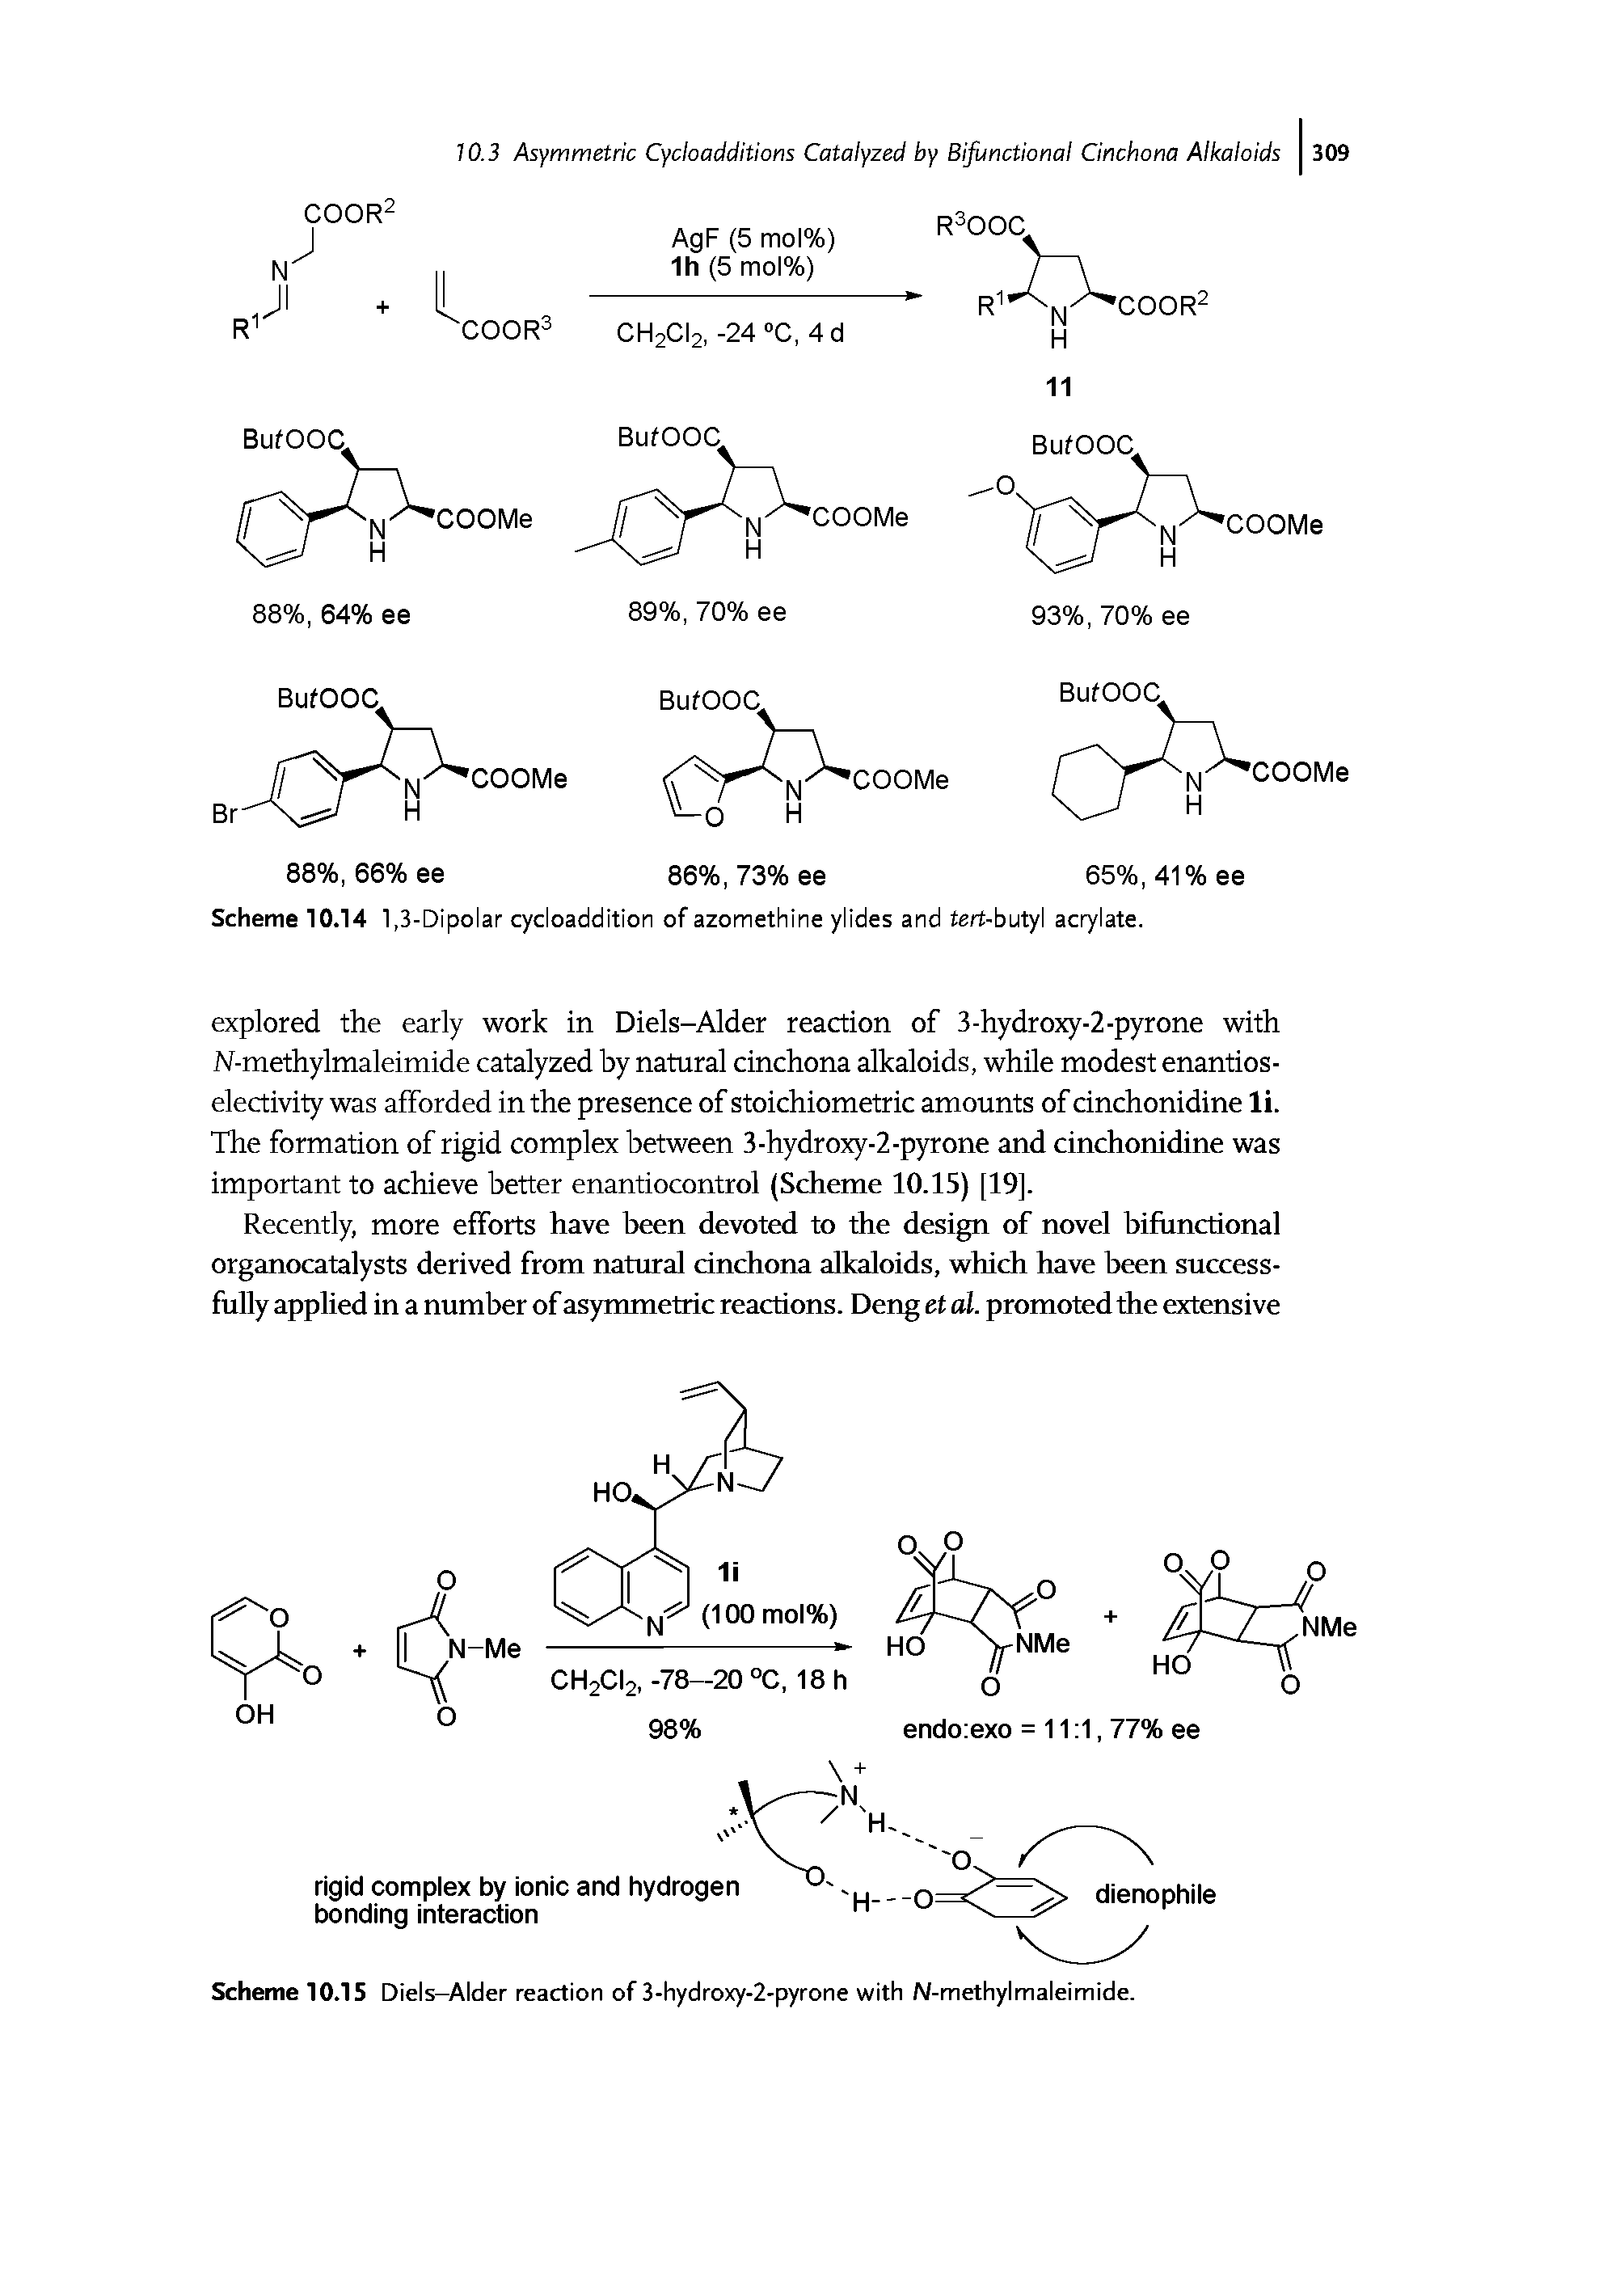 Scheme 10.14 1,3-Dipolar cycloaddition of azomethine ylides and fert-butyl acrylate.